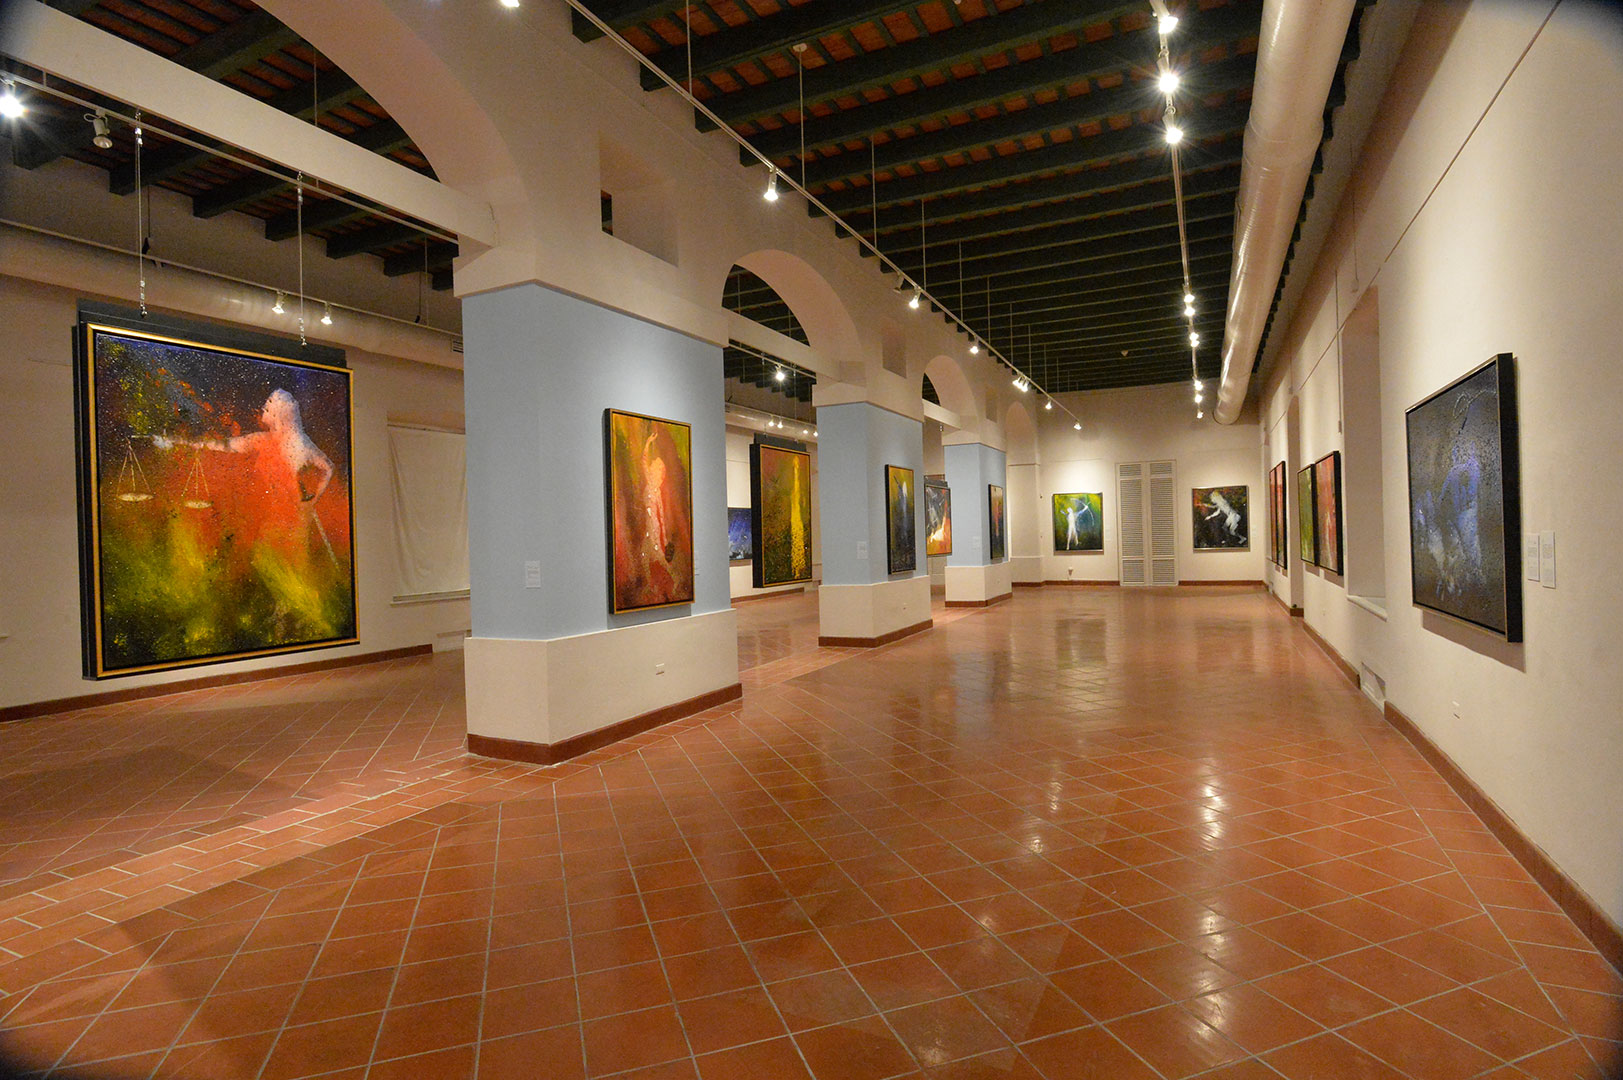 The Musem de las Americas at Cuartel de Ballaja is the largest of the museums.